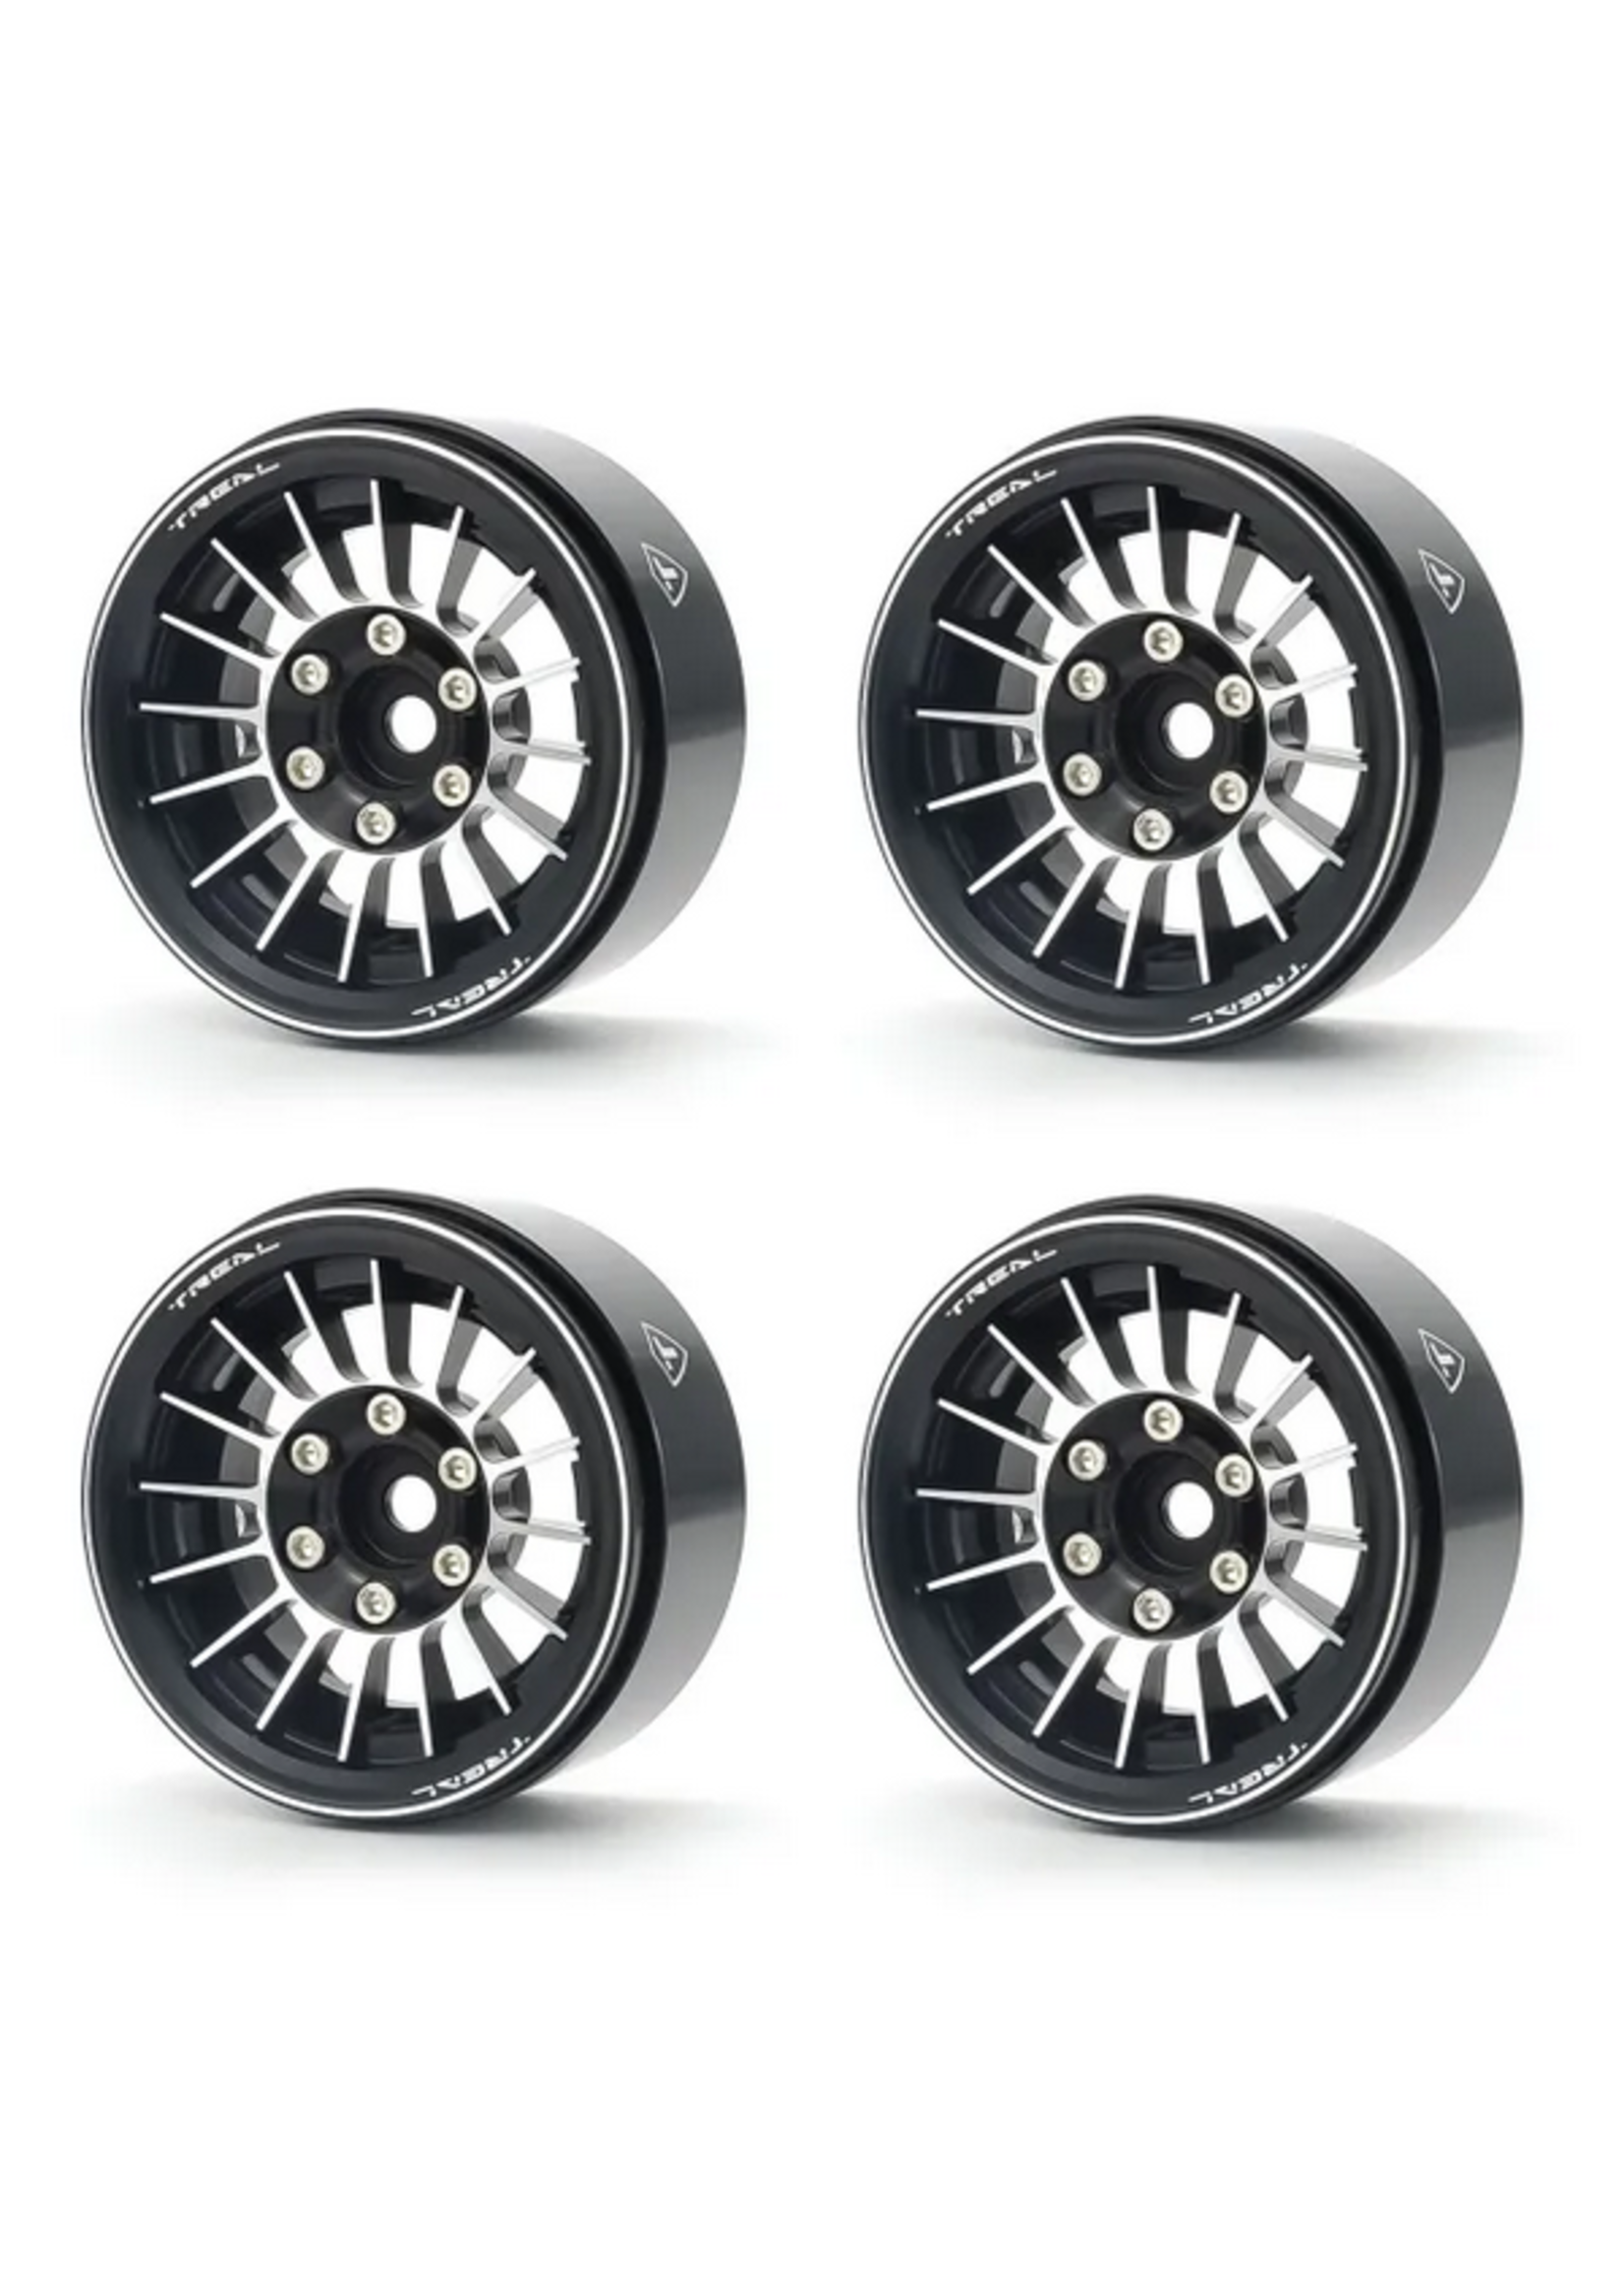 Treal Treal 1.9" Beadlock Wheels (4) Multi Spoke Rim Crawler Wheels for 1/10 SCX10 III TRX-4 RC Trucks-Type J Black